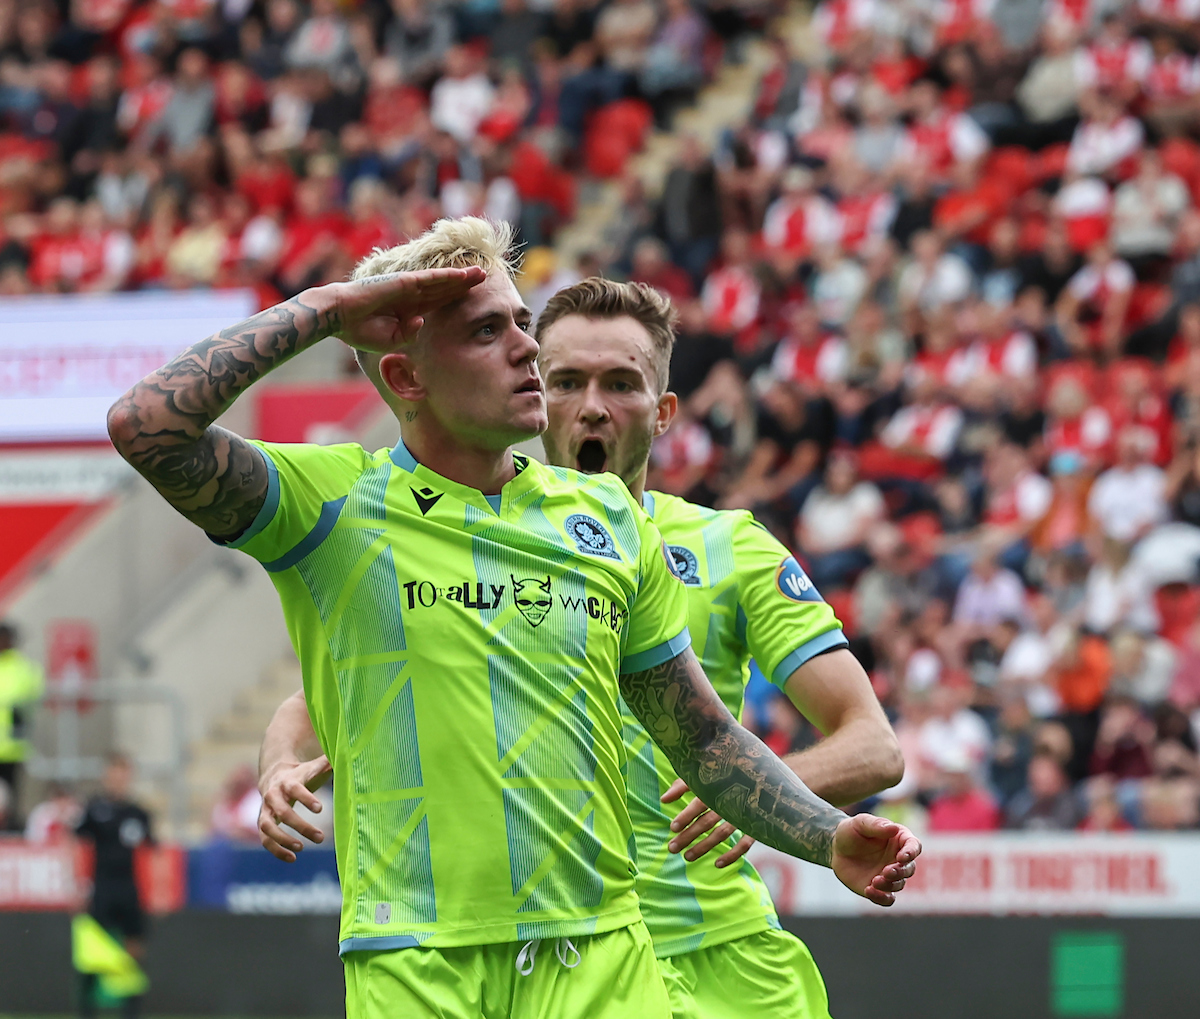 Szmodics names surprising match which kickstarted Blackburn goals